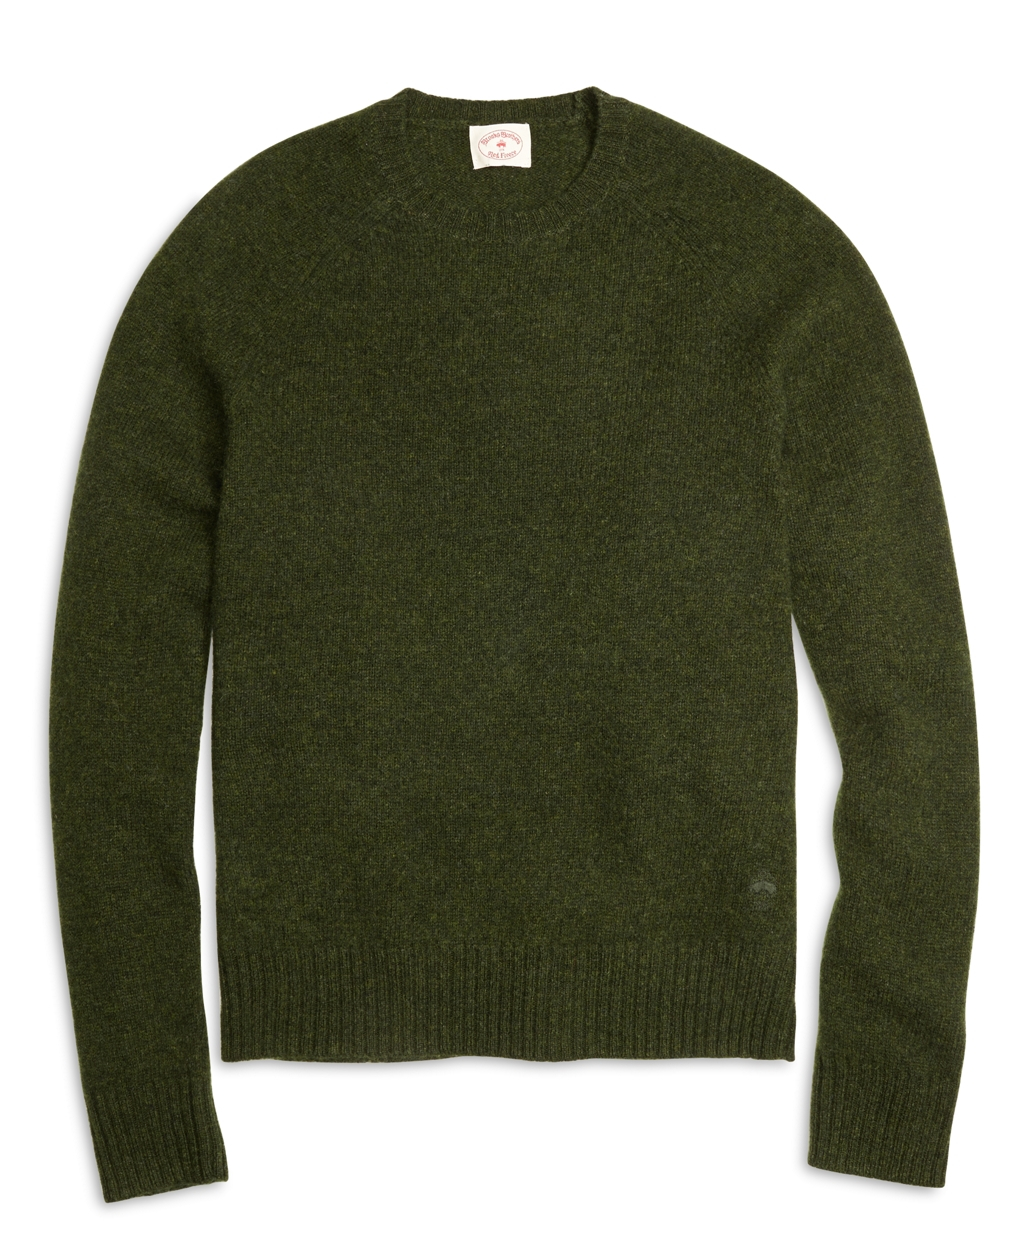 Lyst - Brooks Brothers Shetland Wool Crewneck Sweater in Green